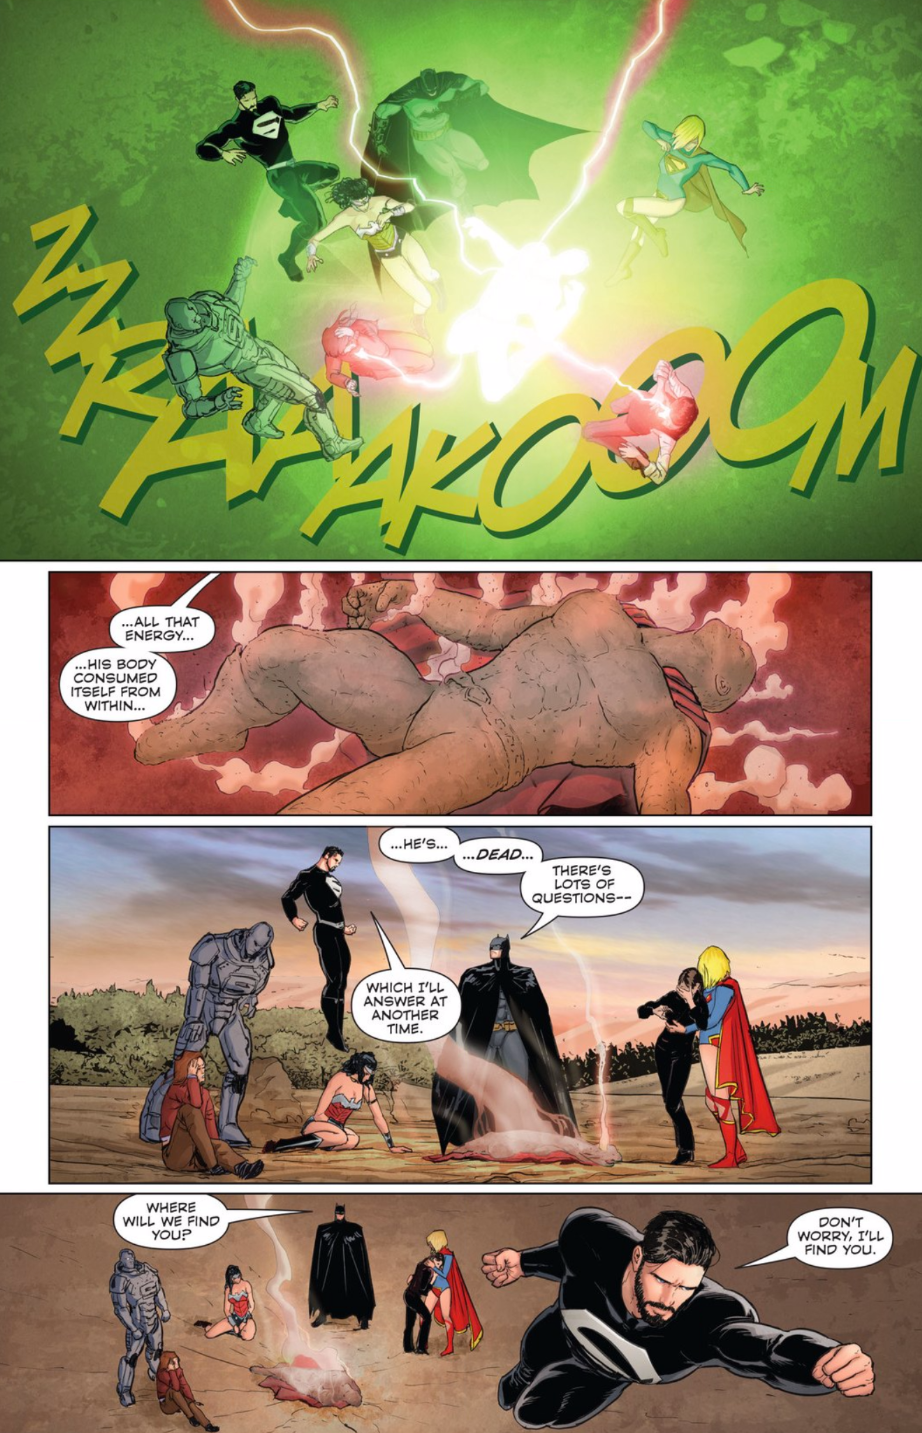 22 - [DC Comics] Superman: Discusión General - Página 10 Pmxp5wkhym7m6rtysmbn